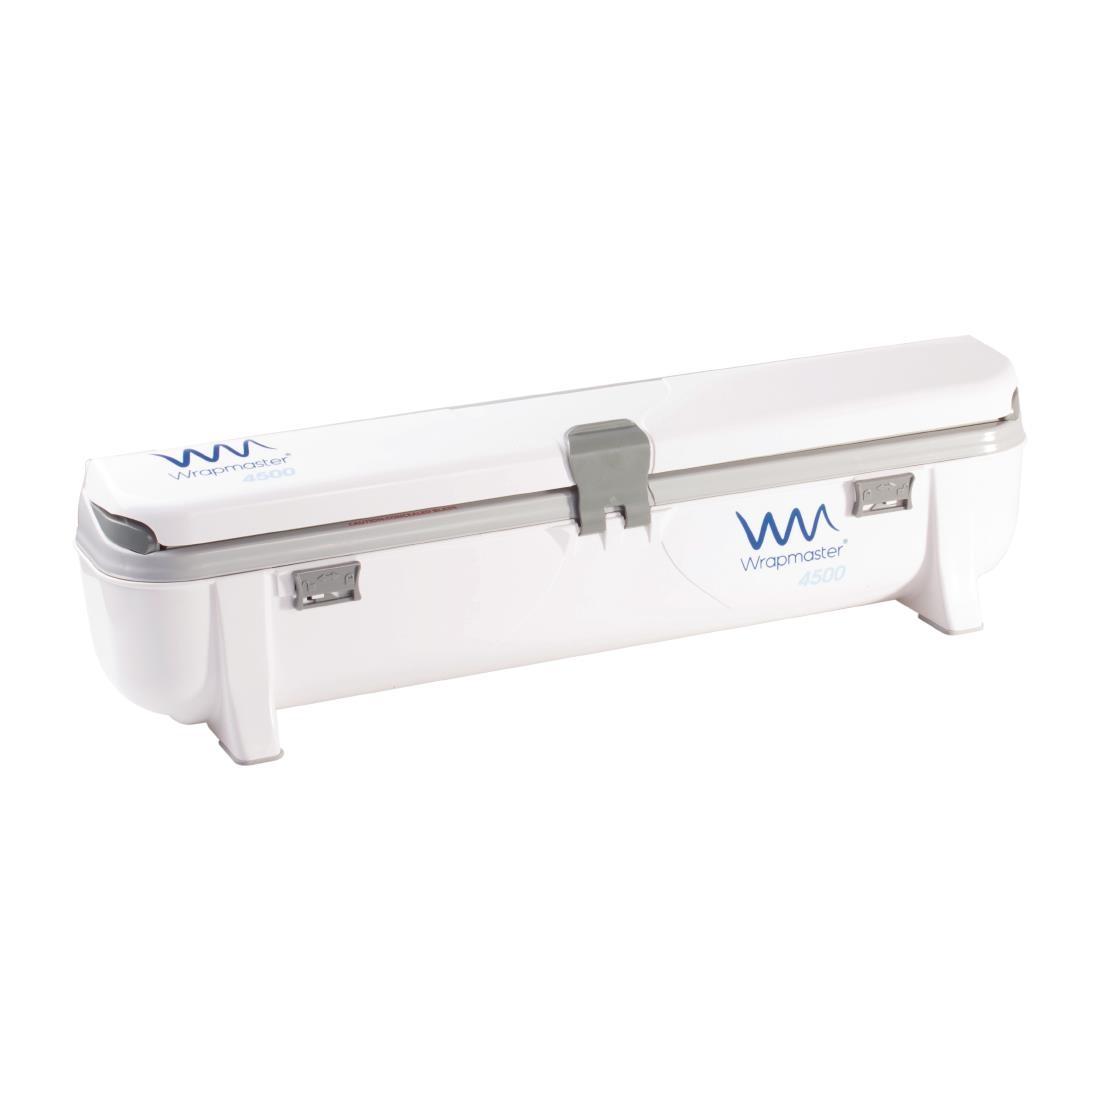 Wrapmaster 4500 Cling Film and Foil Dispenser - M802  - 1